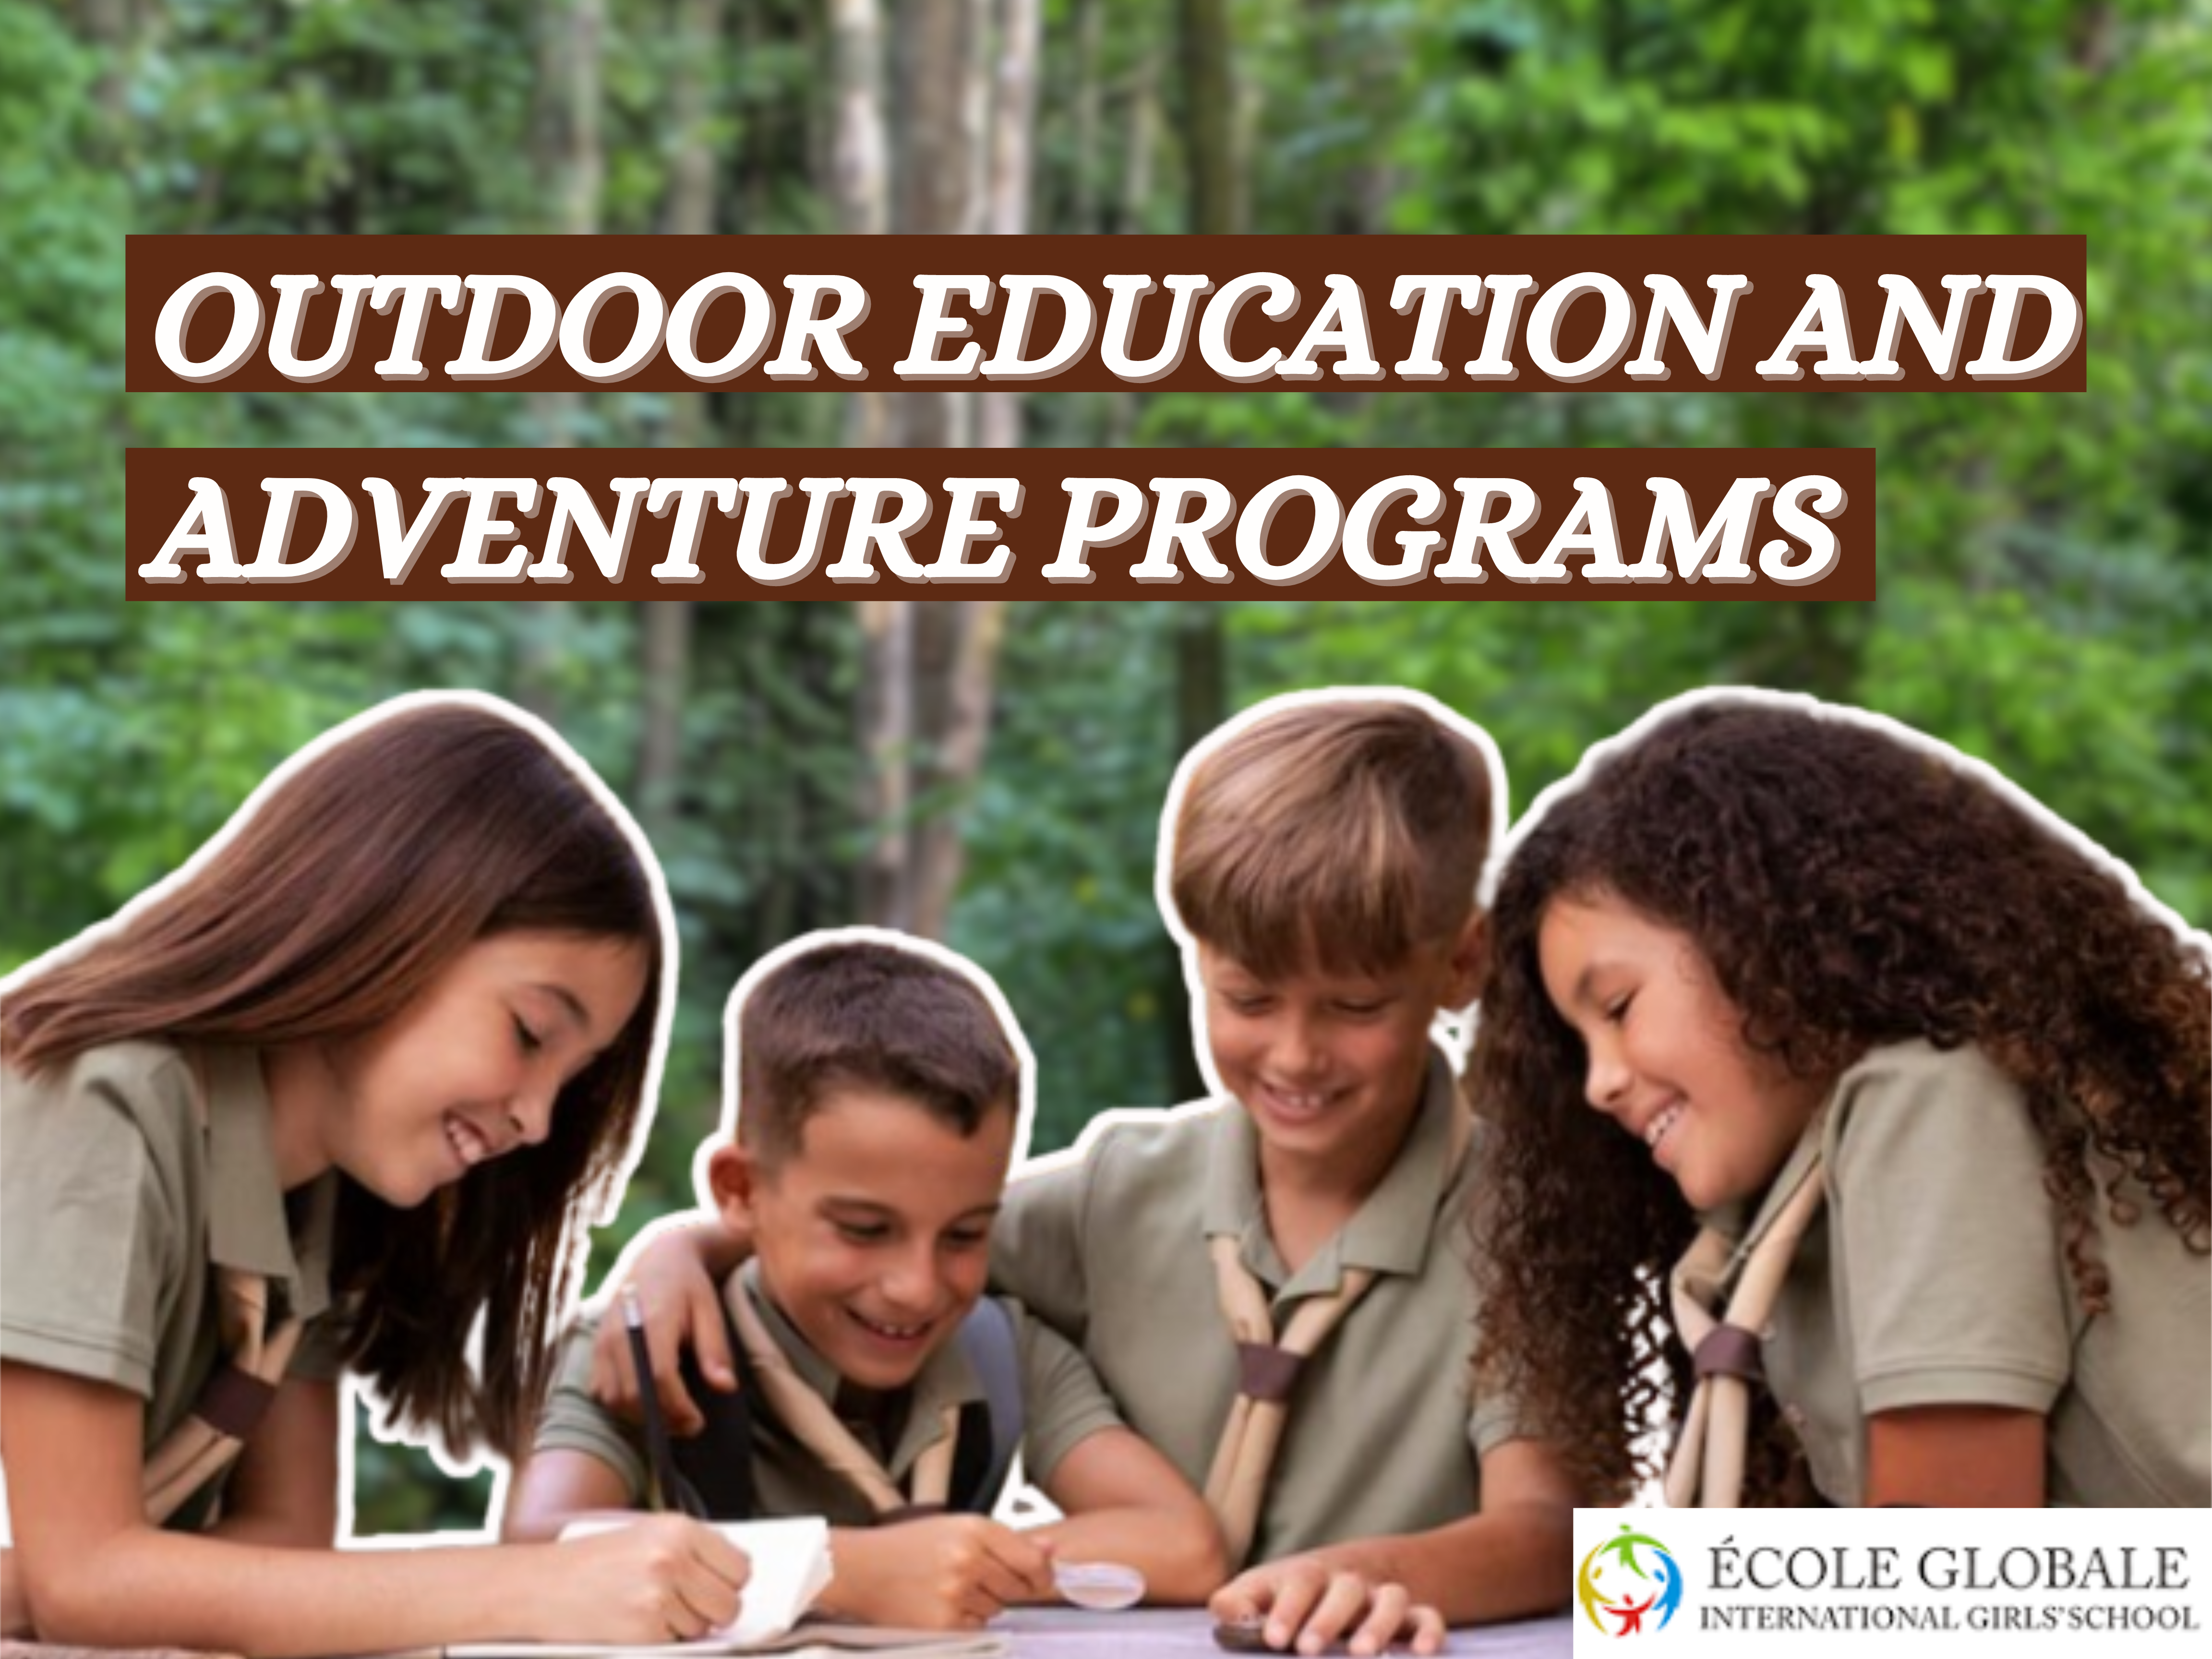 You are currently viewing Adventure Programs and Outdoor Education in Dehradun Boarding Schools